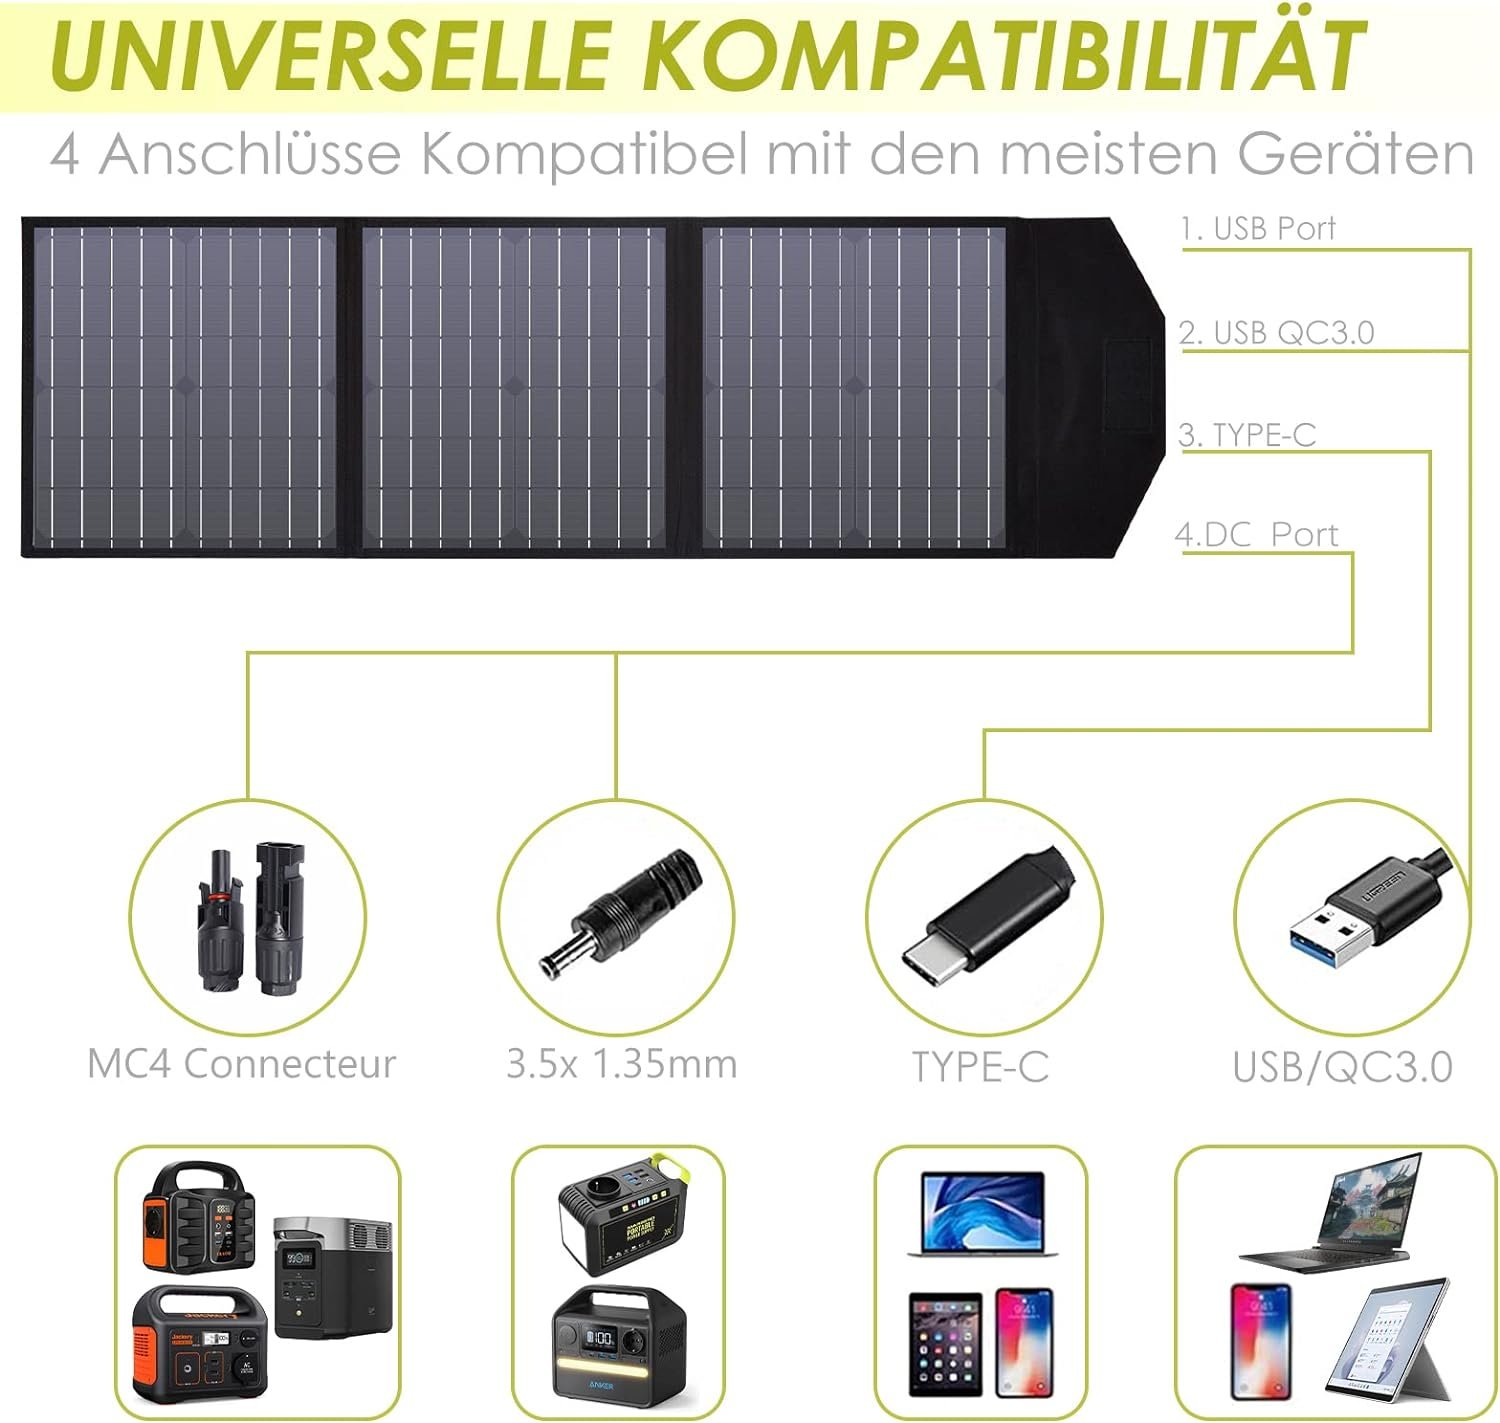 MARBERO 60W Foldable Solar Panel Review